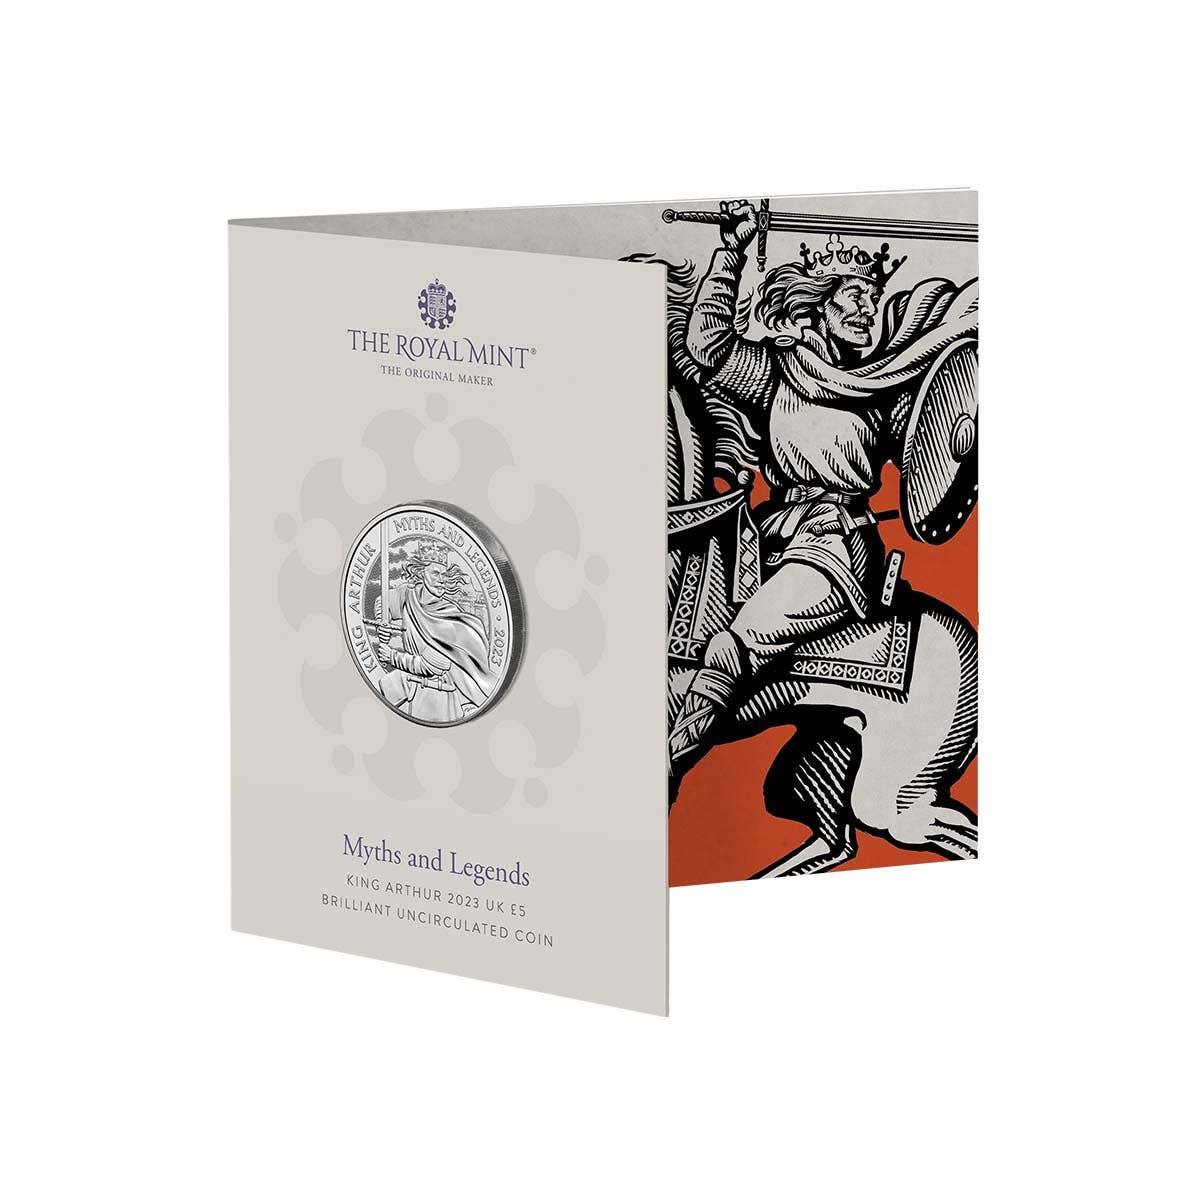 King Arthur 2023 £5 Brilliant Uncirculated Coin